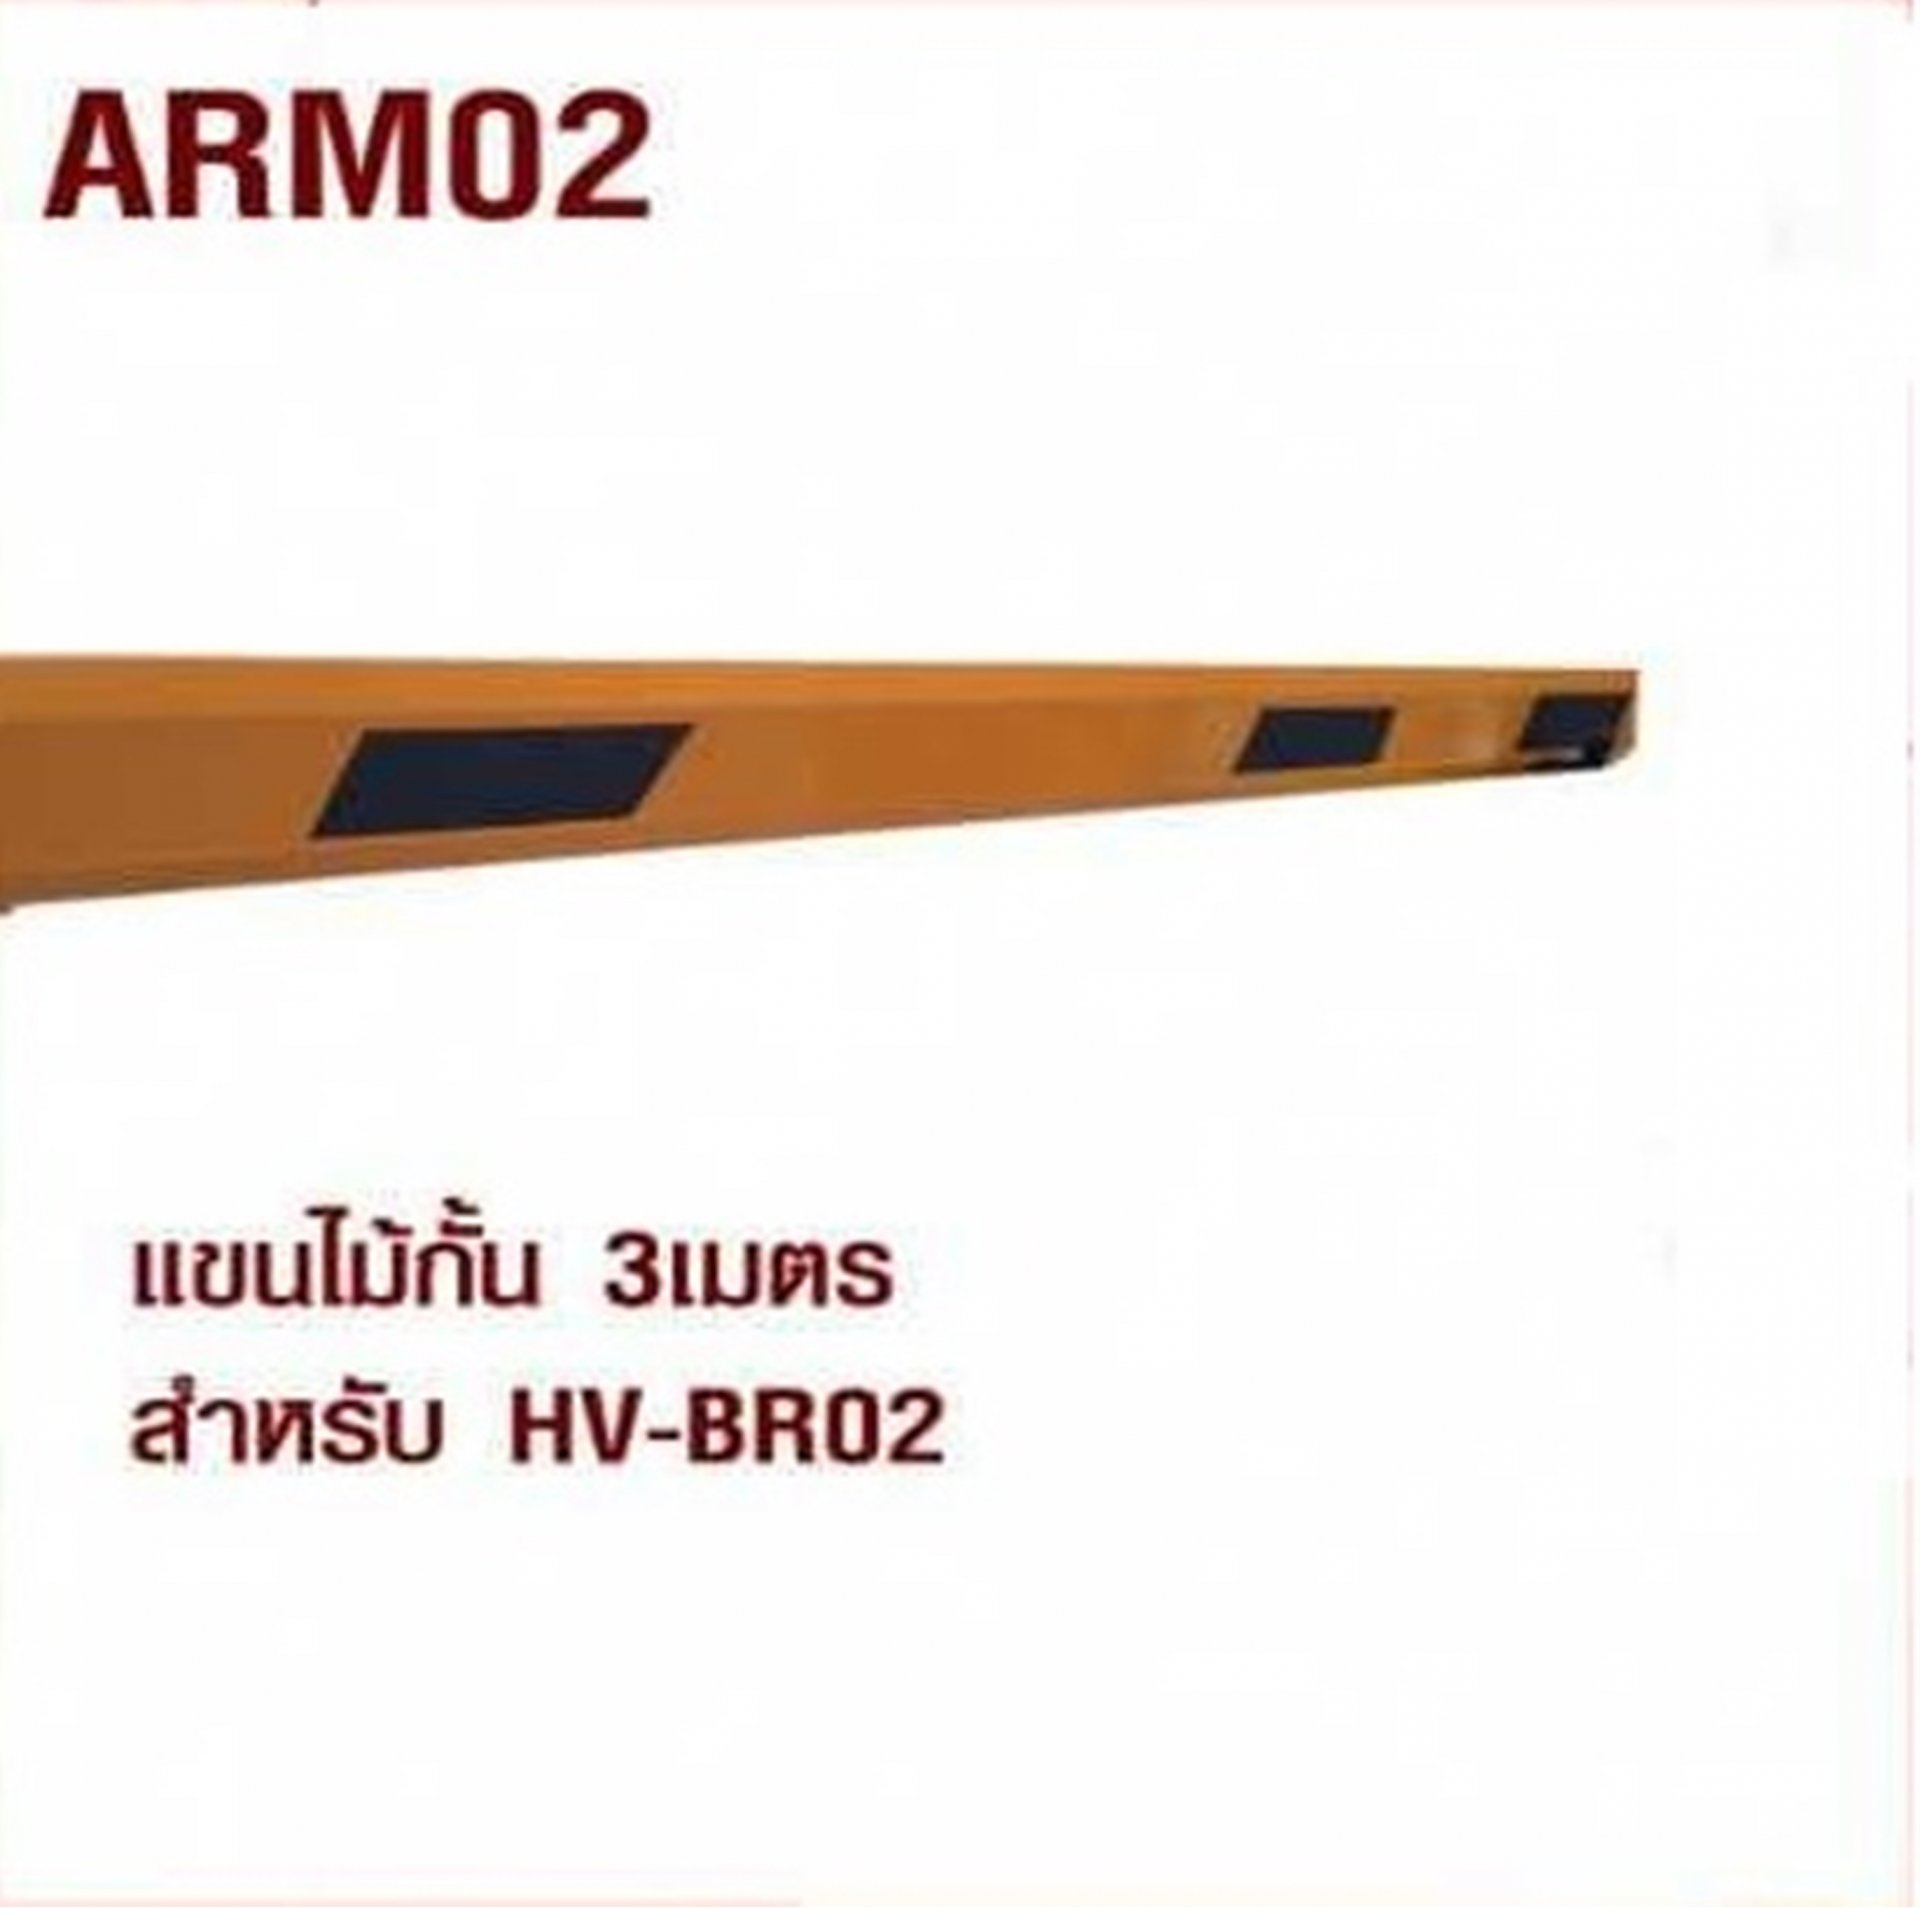 ARM02 แขนไม้กั้น 3 เมตร